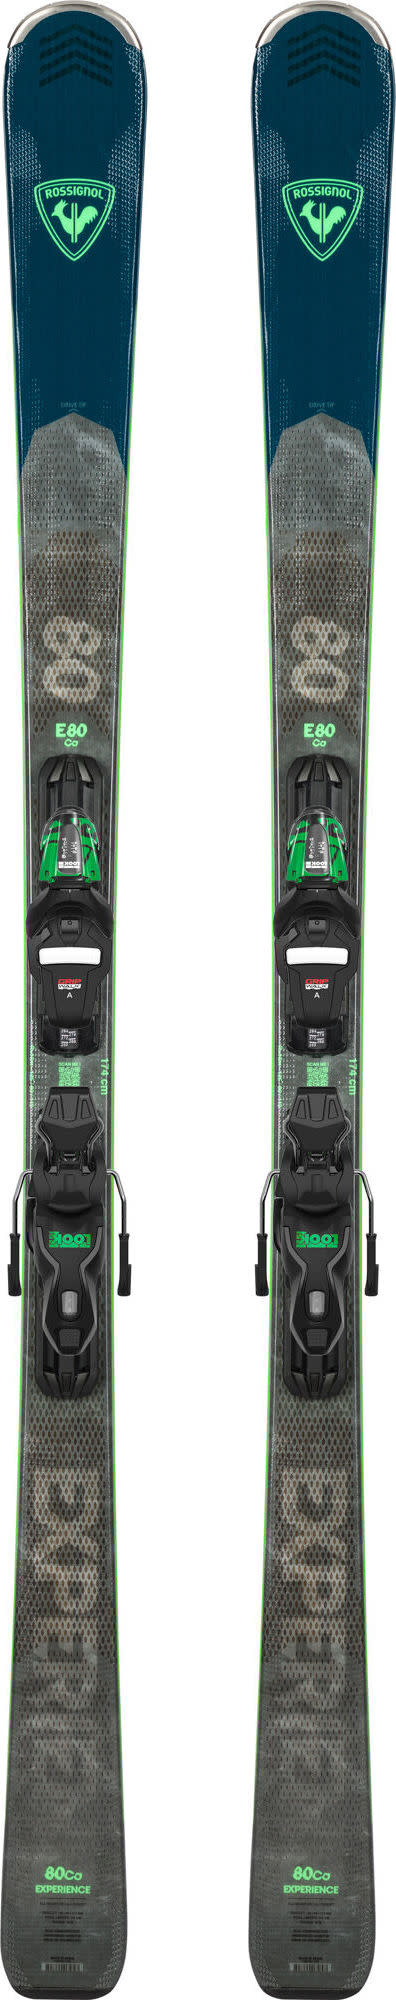 Rossignol Men’s All Mountain Skis Experience 80 Carbon + Xpress11 GW B83 Black Green Green